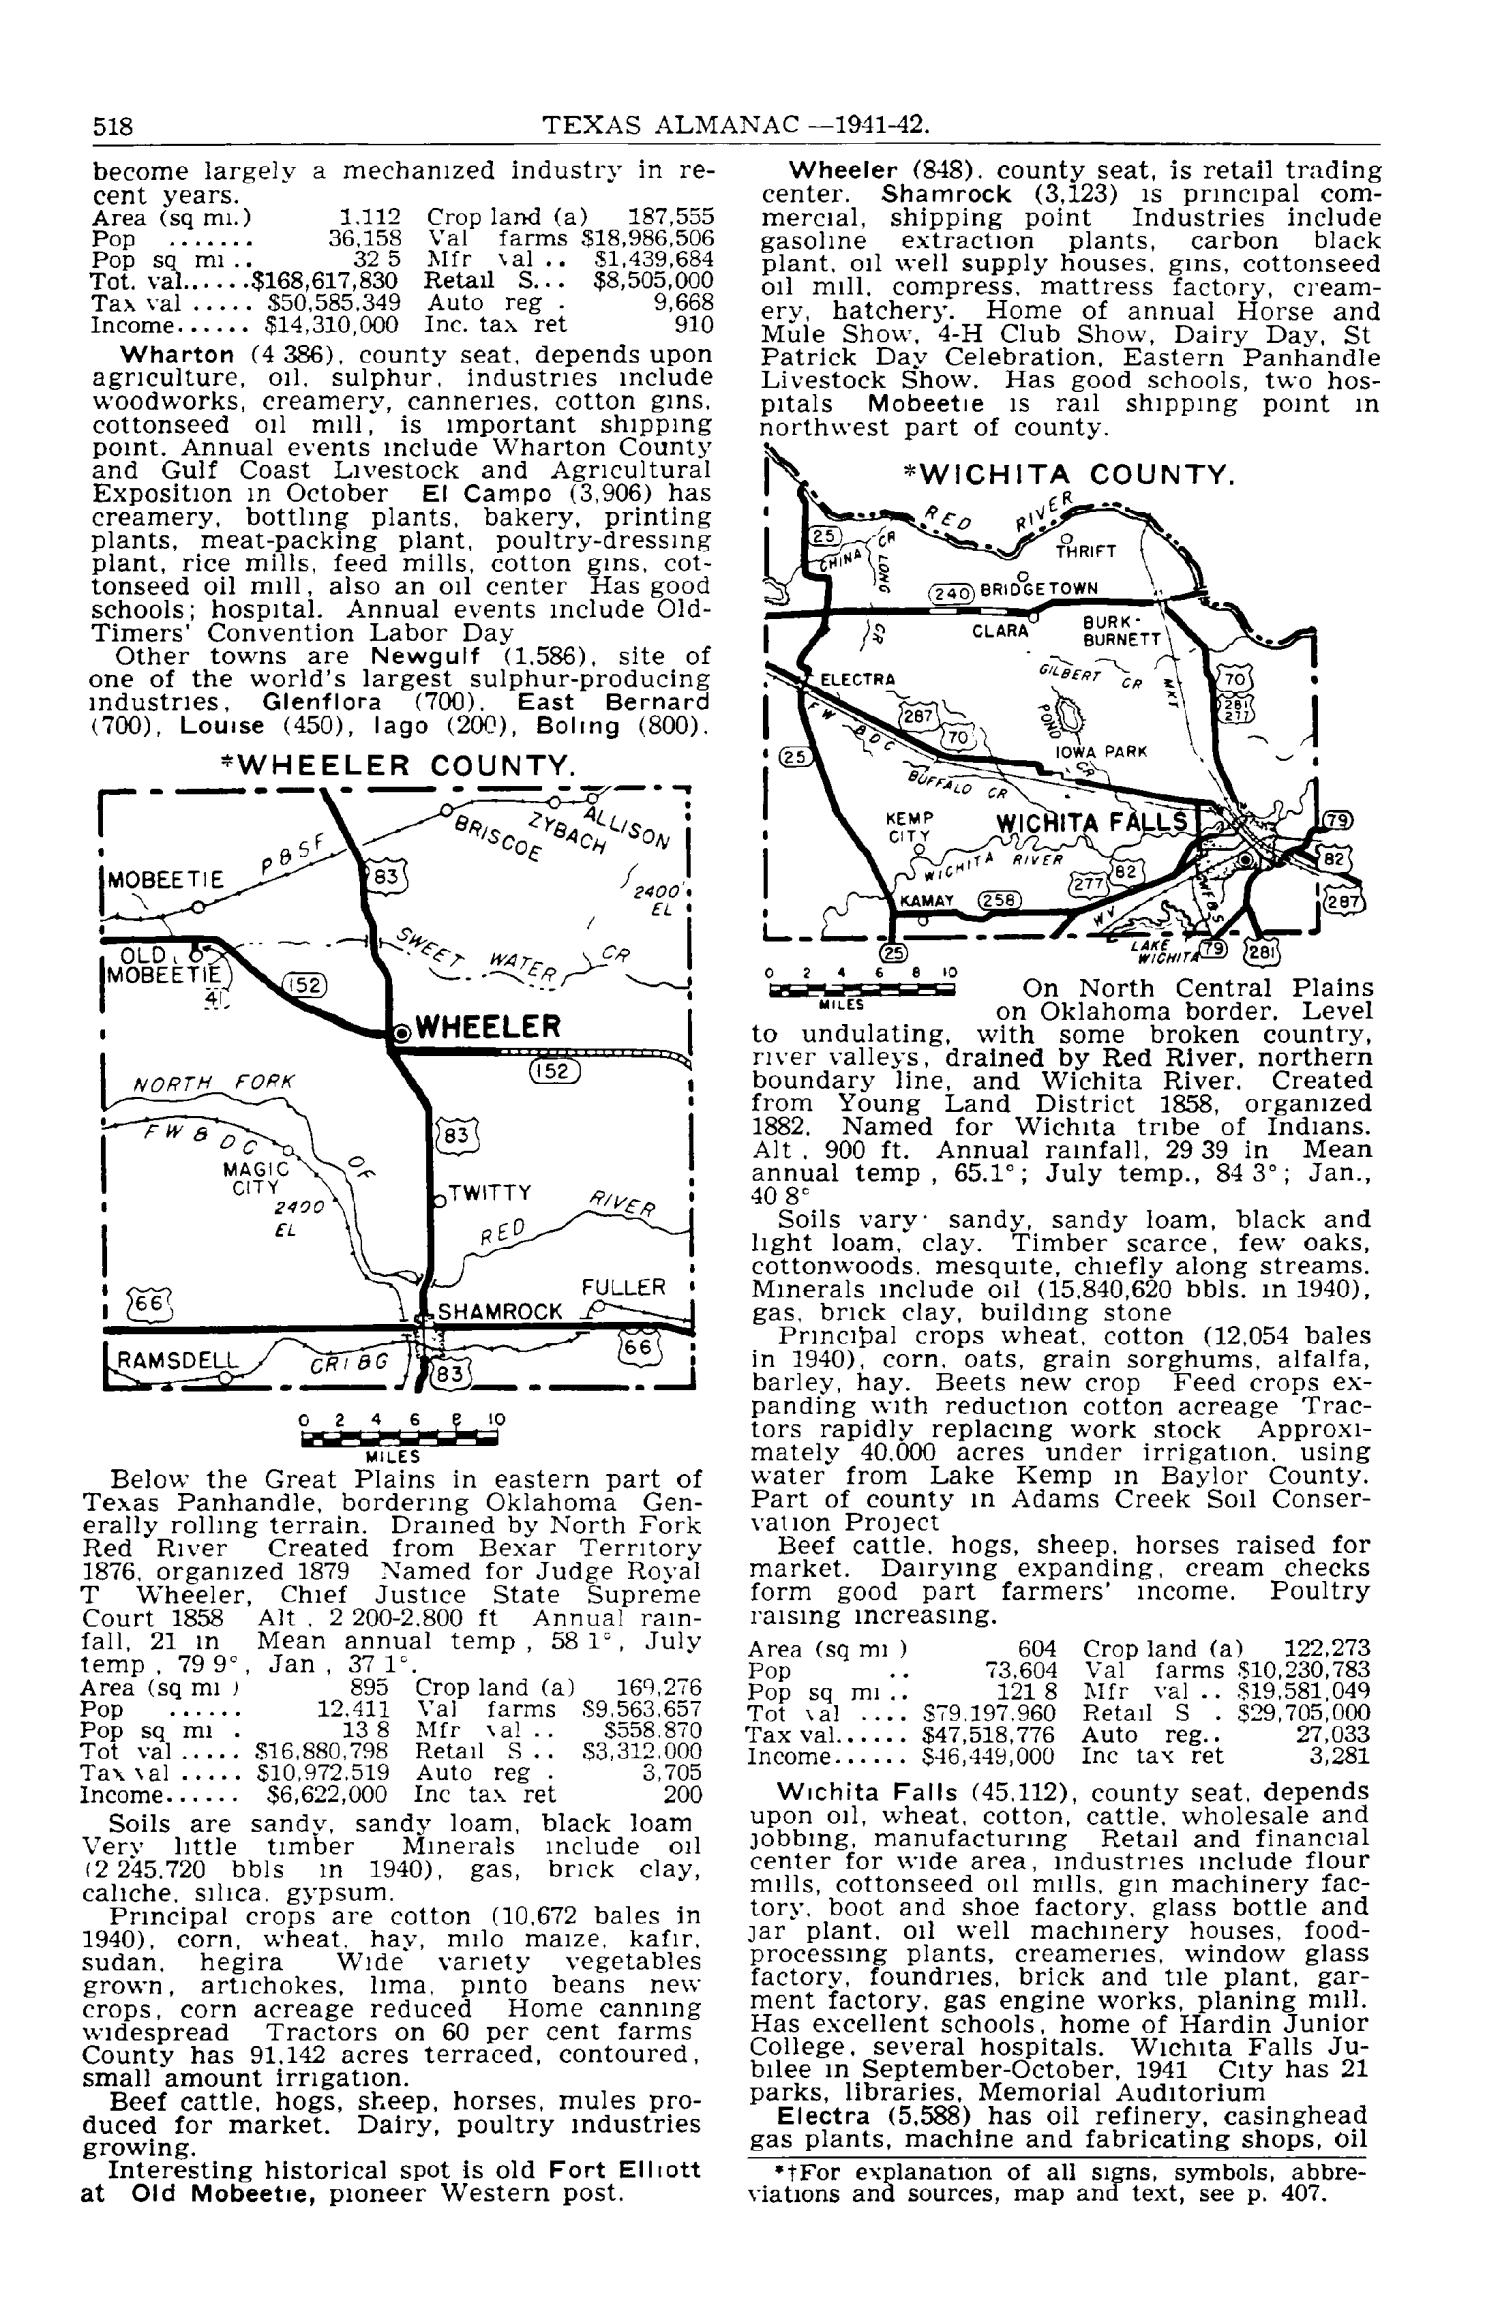 Texas Almanac, 1941-1942 - Page 518 - The Portal to Texas History